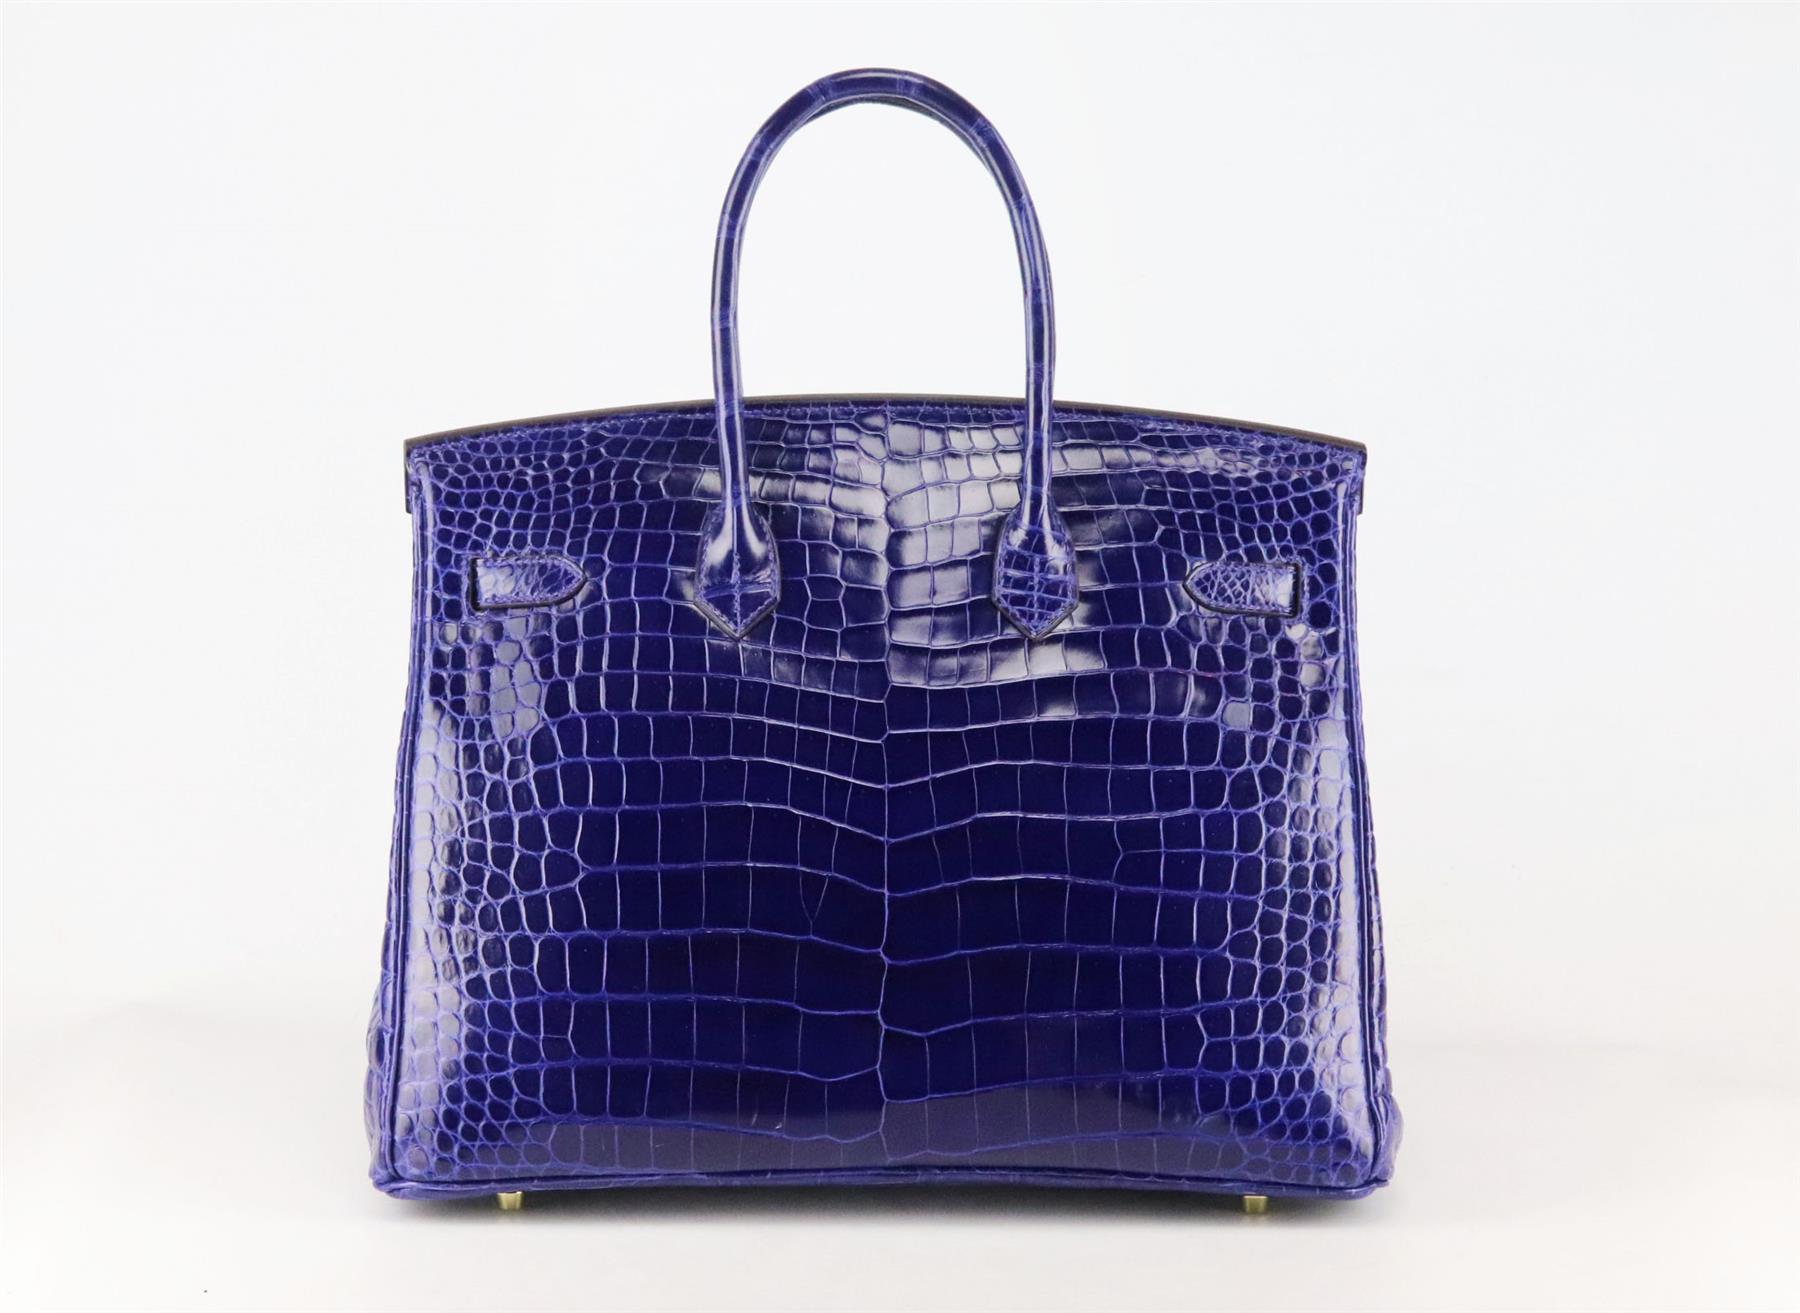 Hermès 2014 Birkin 35cm Porosus Crocodile Leather Bag For Sale 2